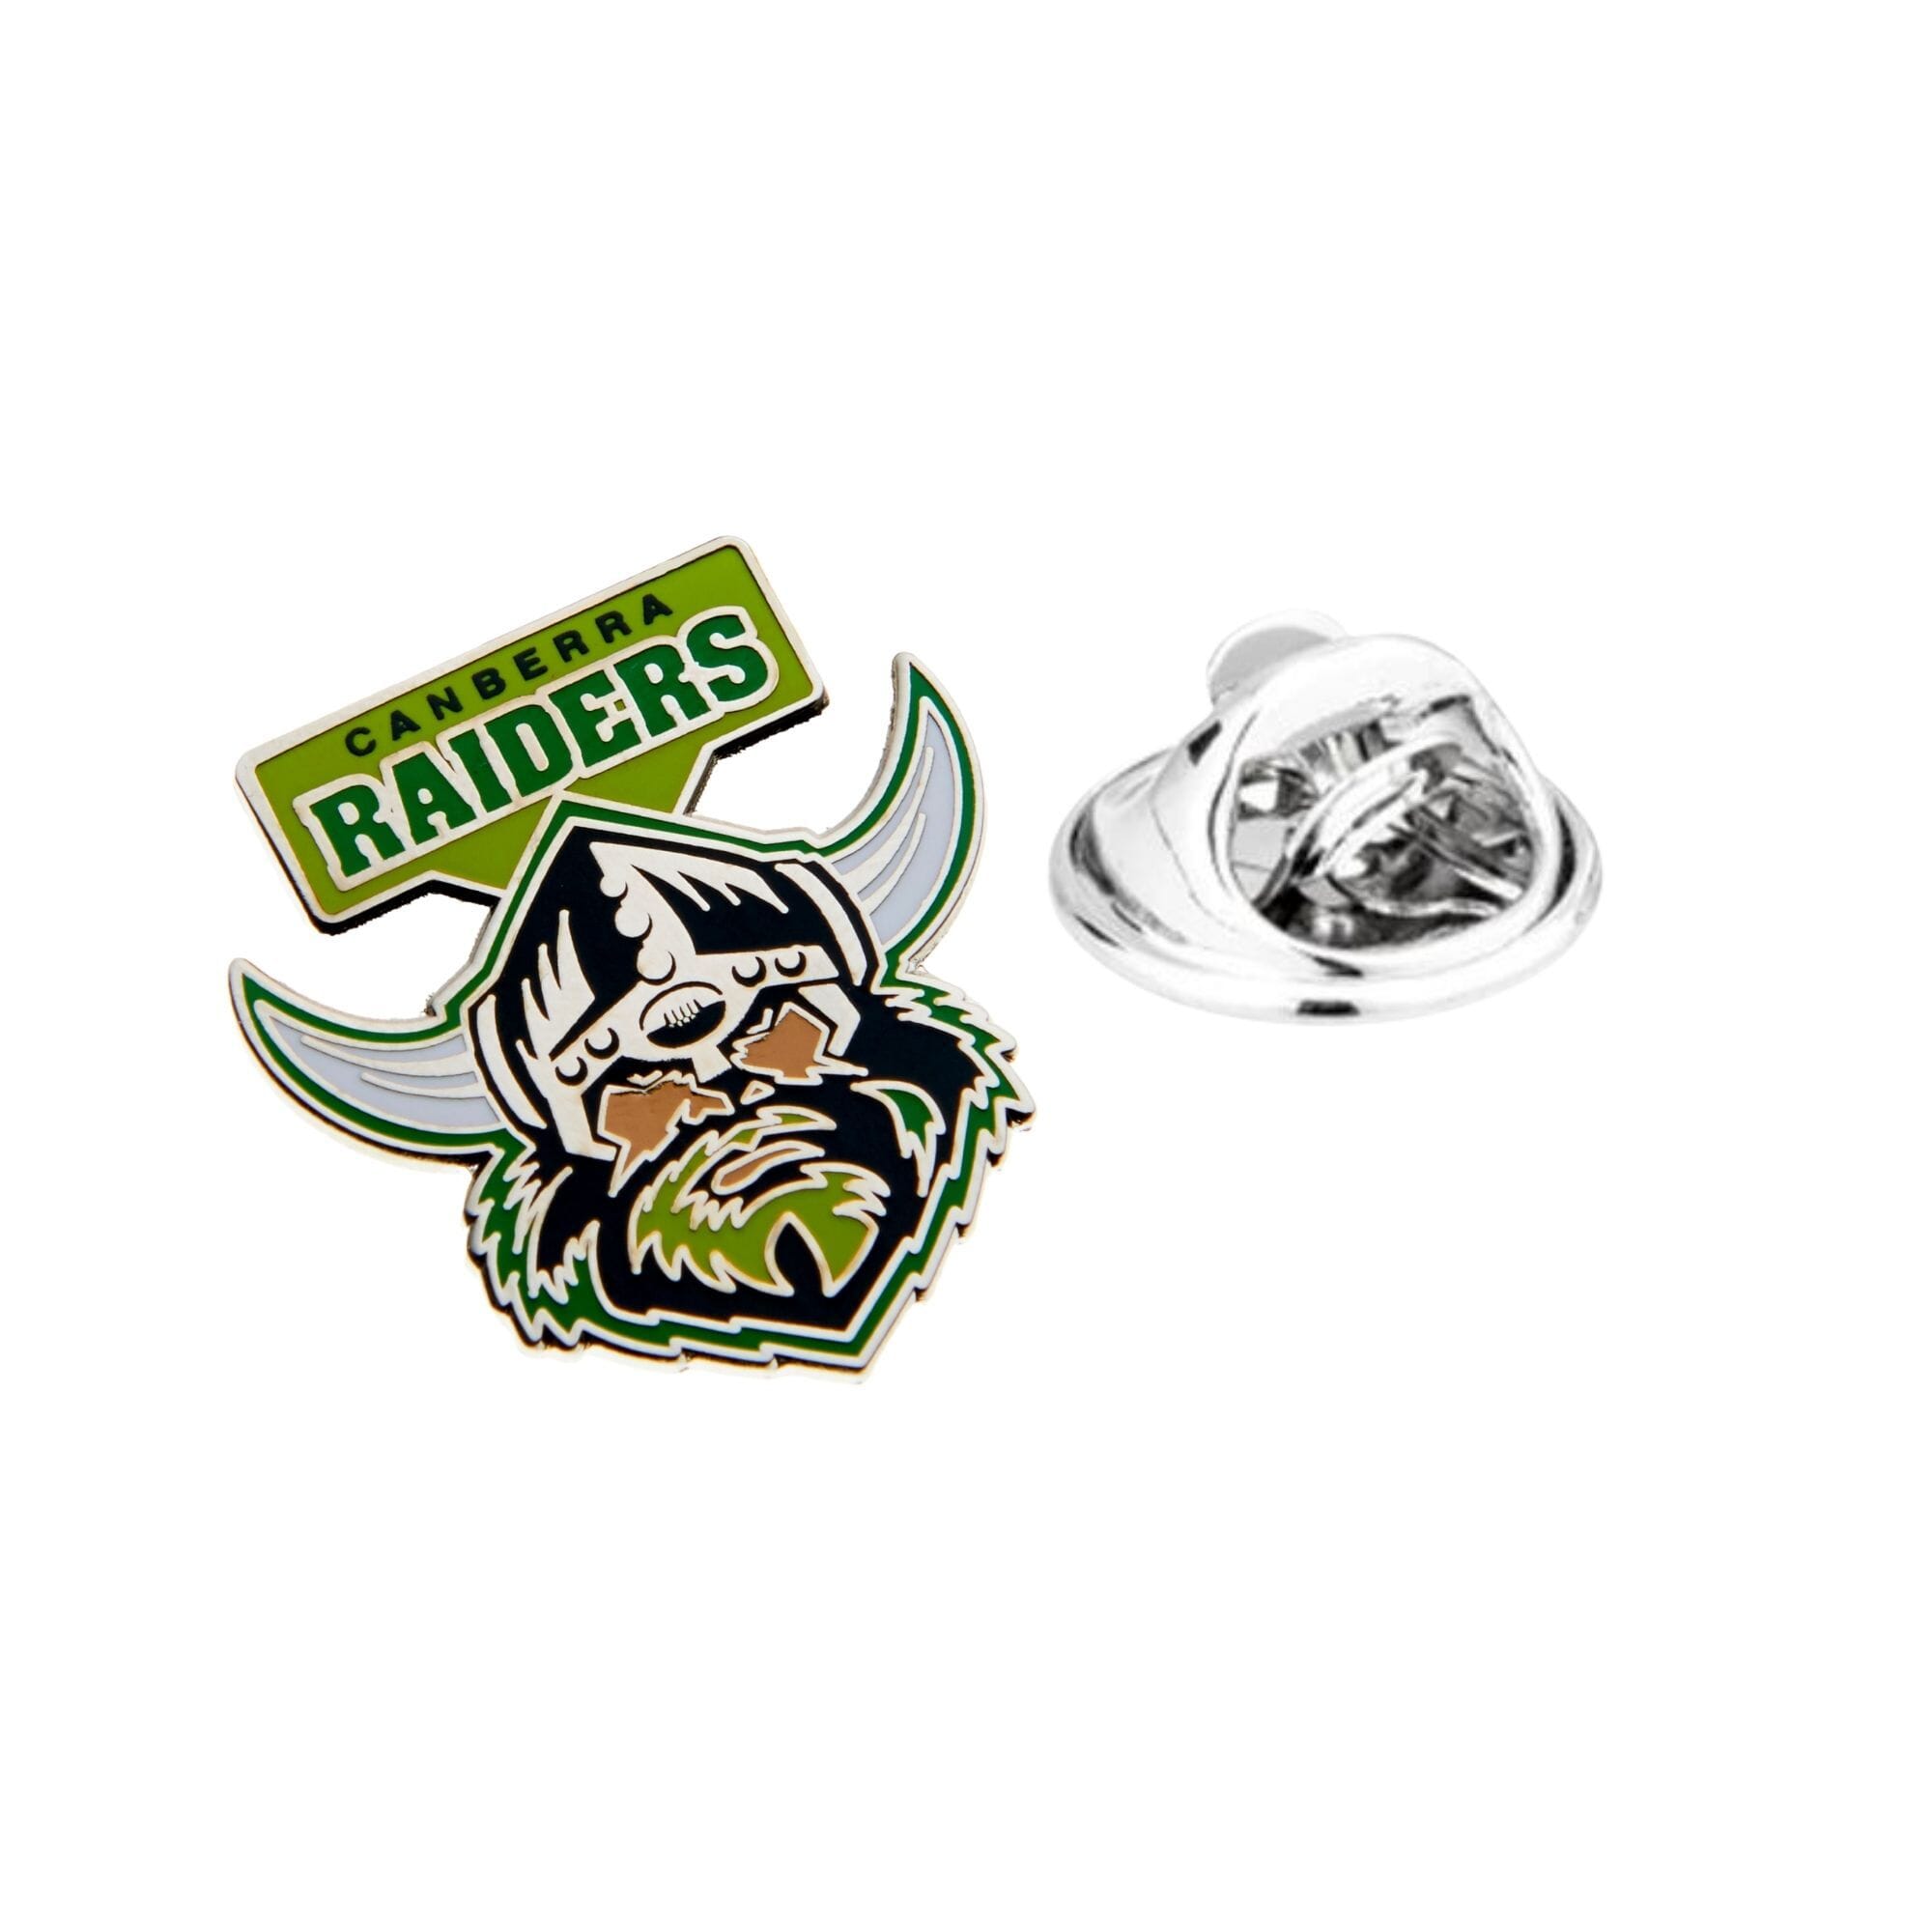 Canberra Raiders Logo NRL Pin Lapel Pin Clinks 